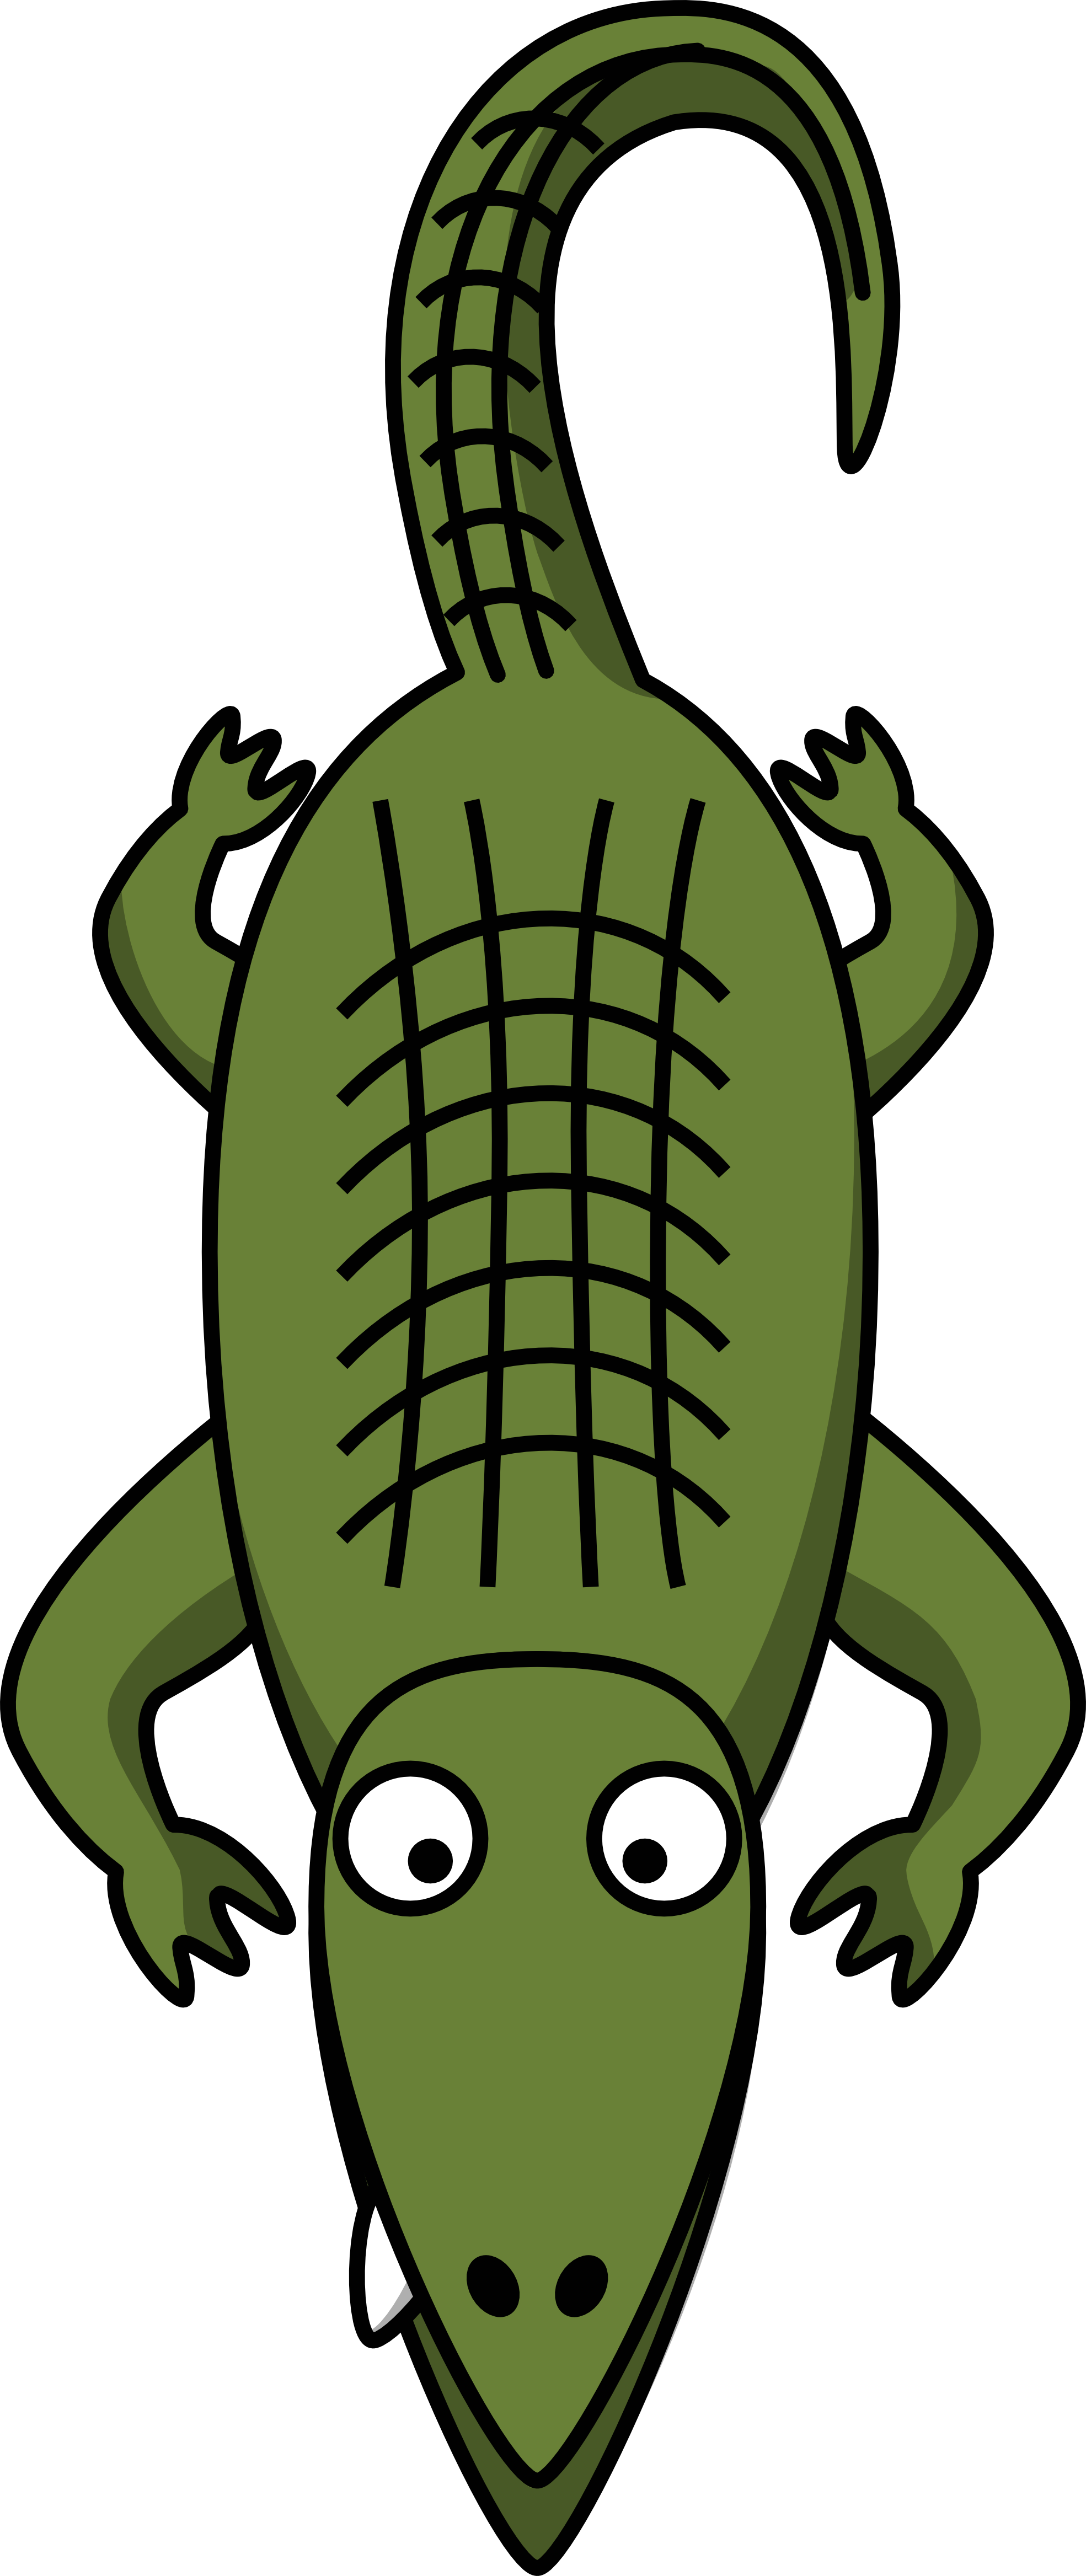 alligator images clip art